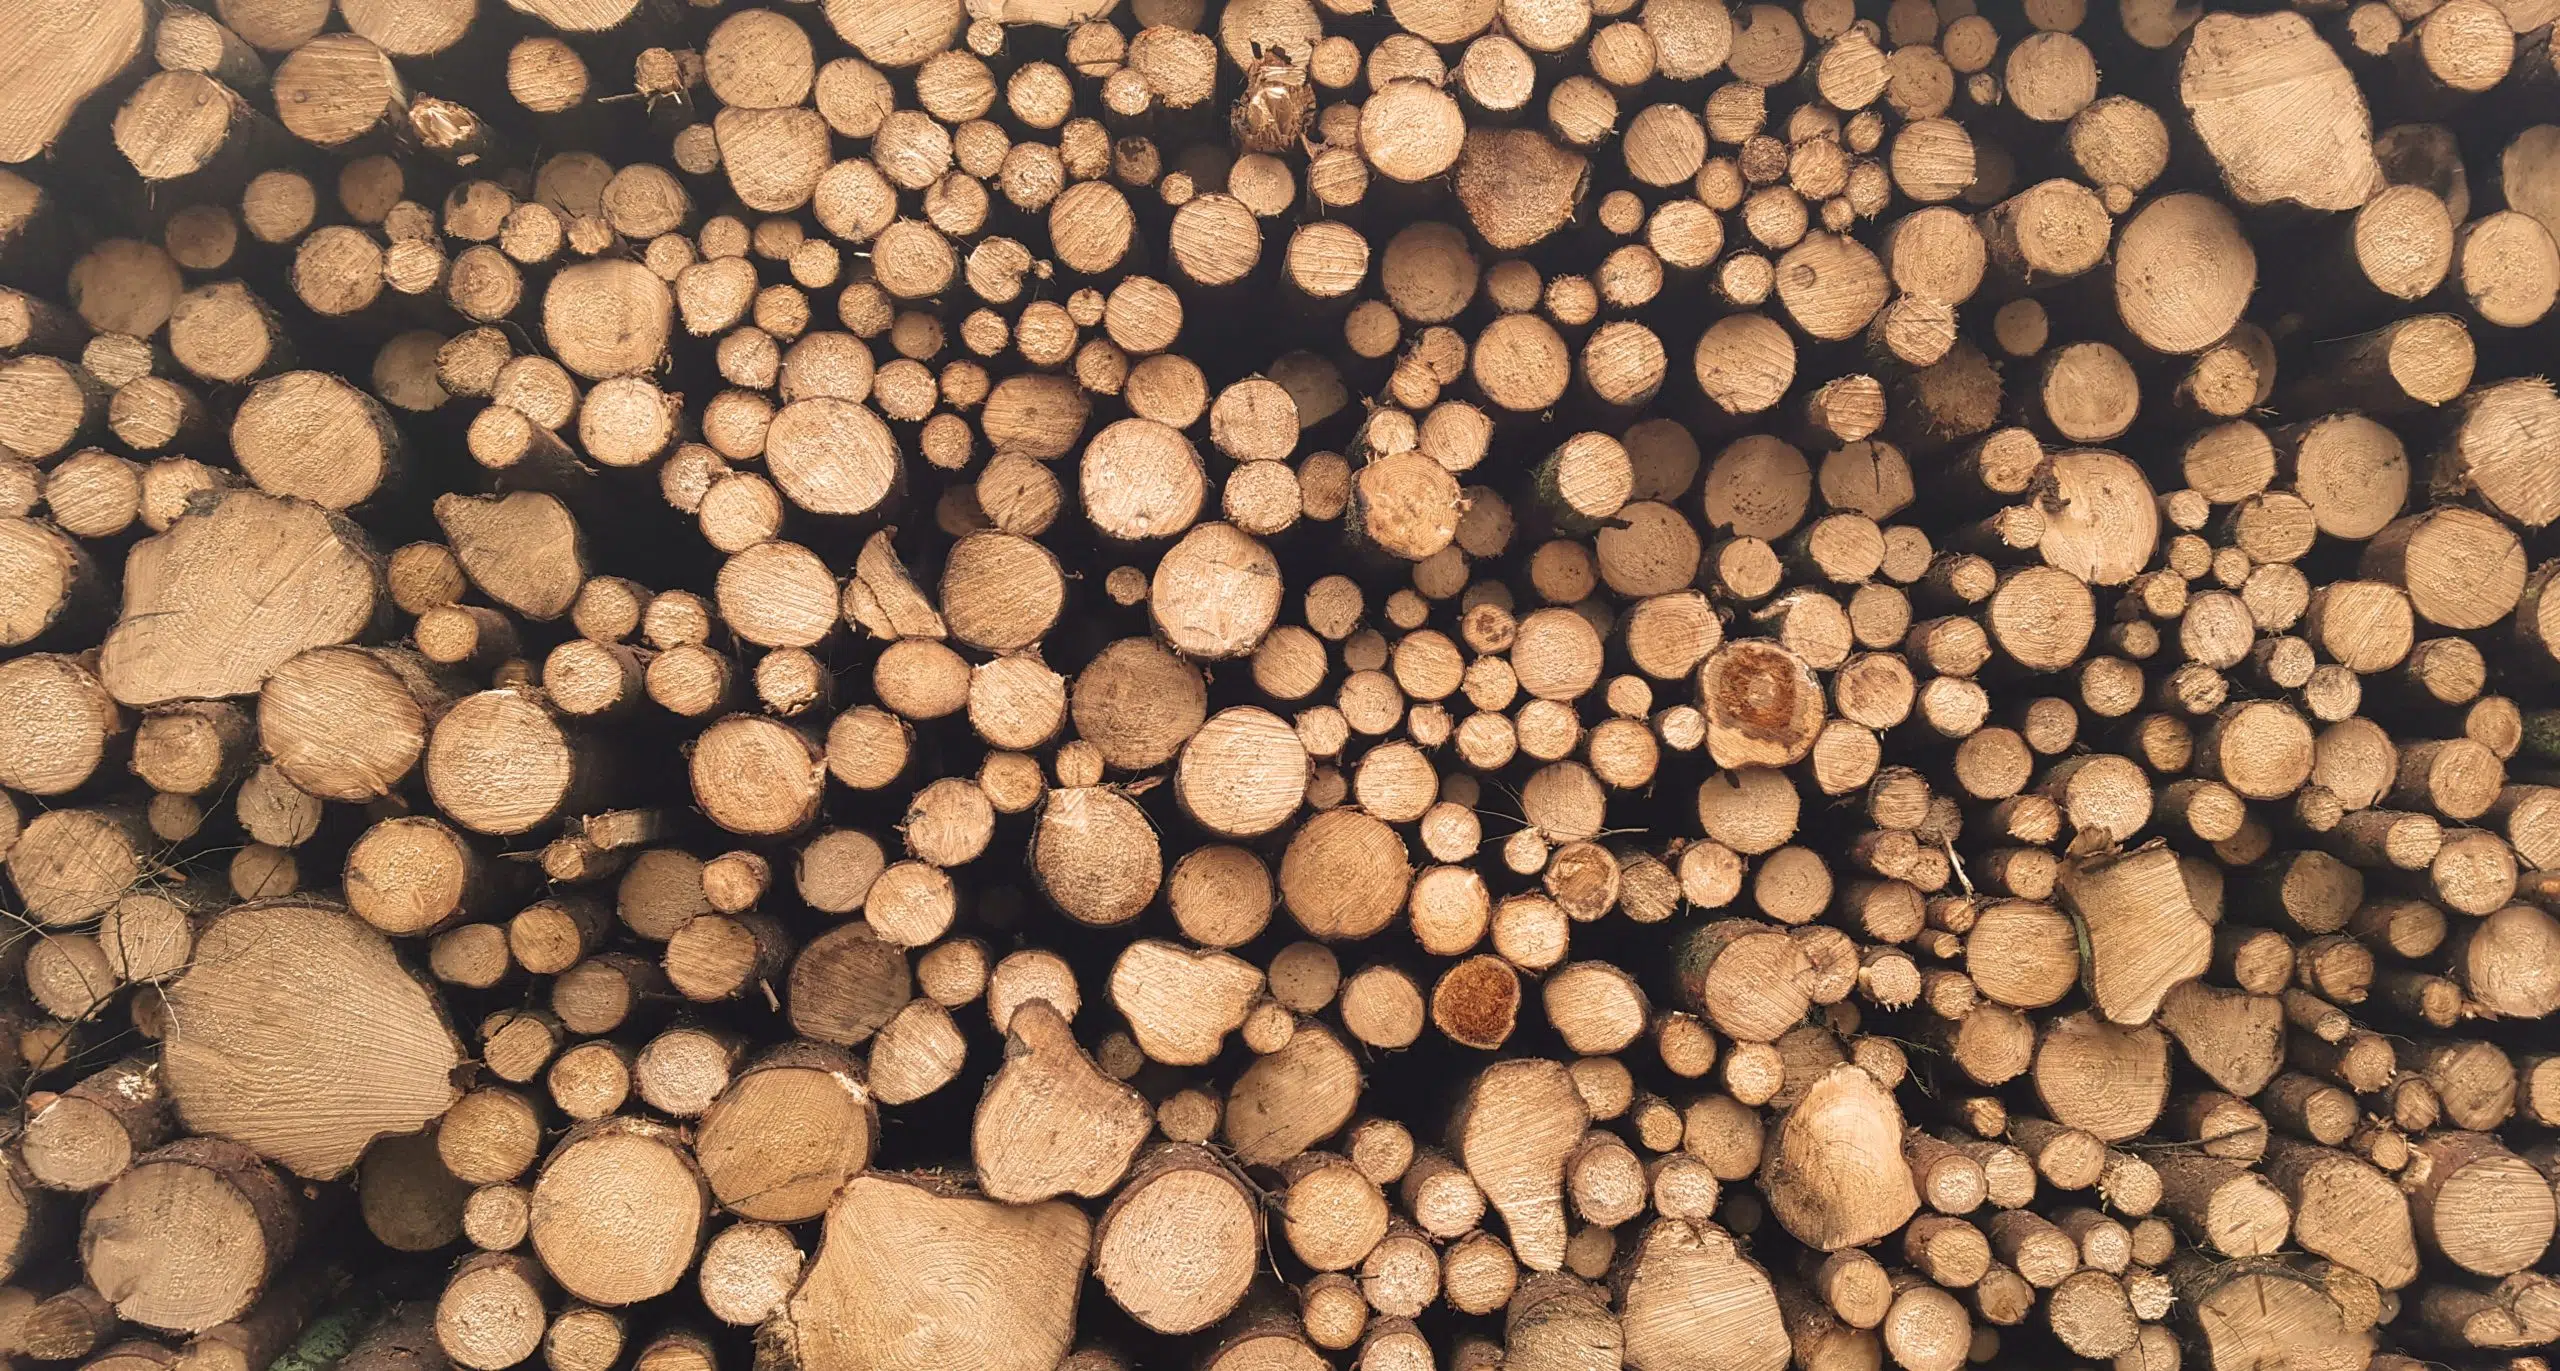 U.S. Increases Duties On Canadian Softwood Lumber